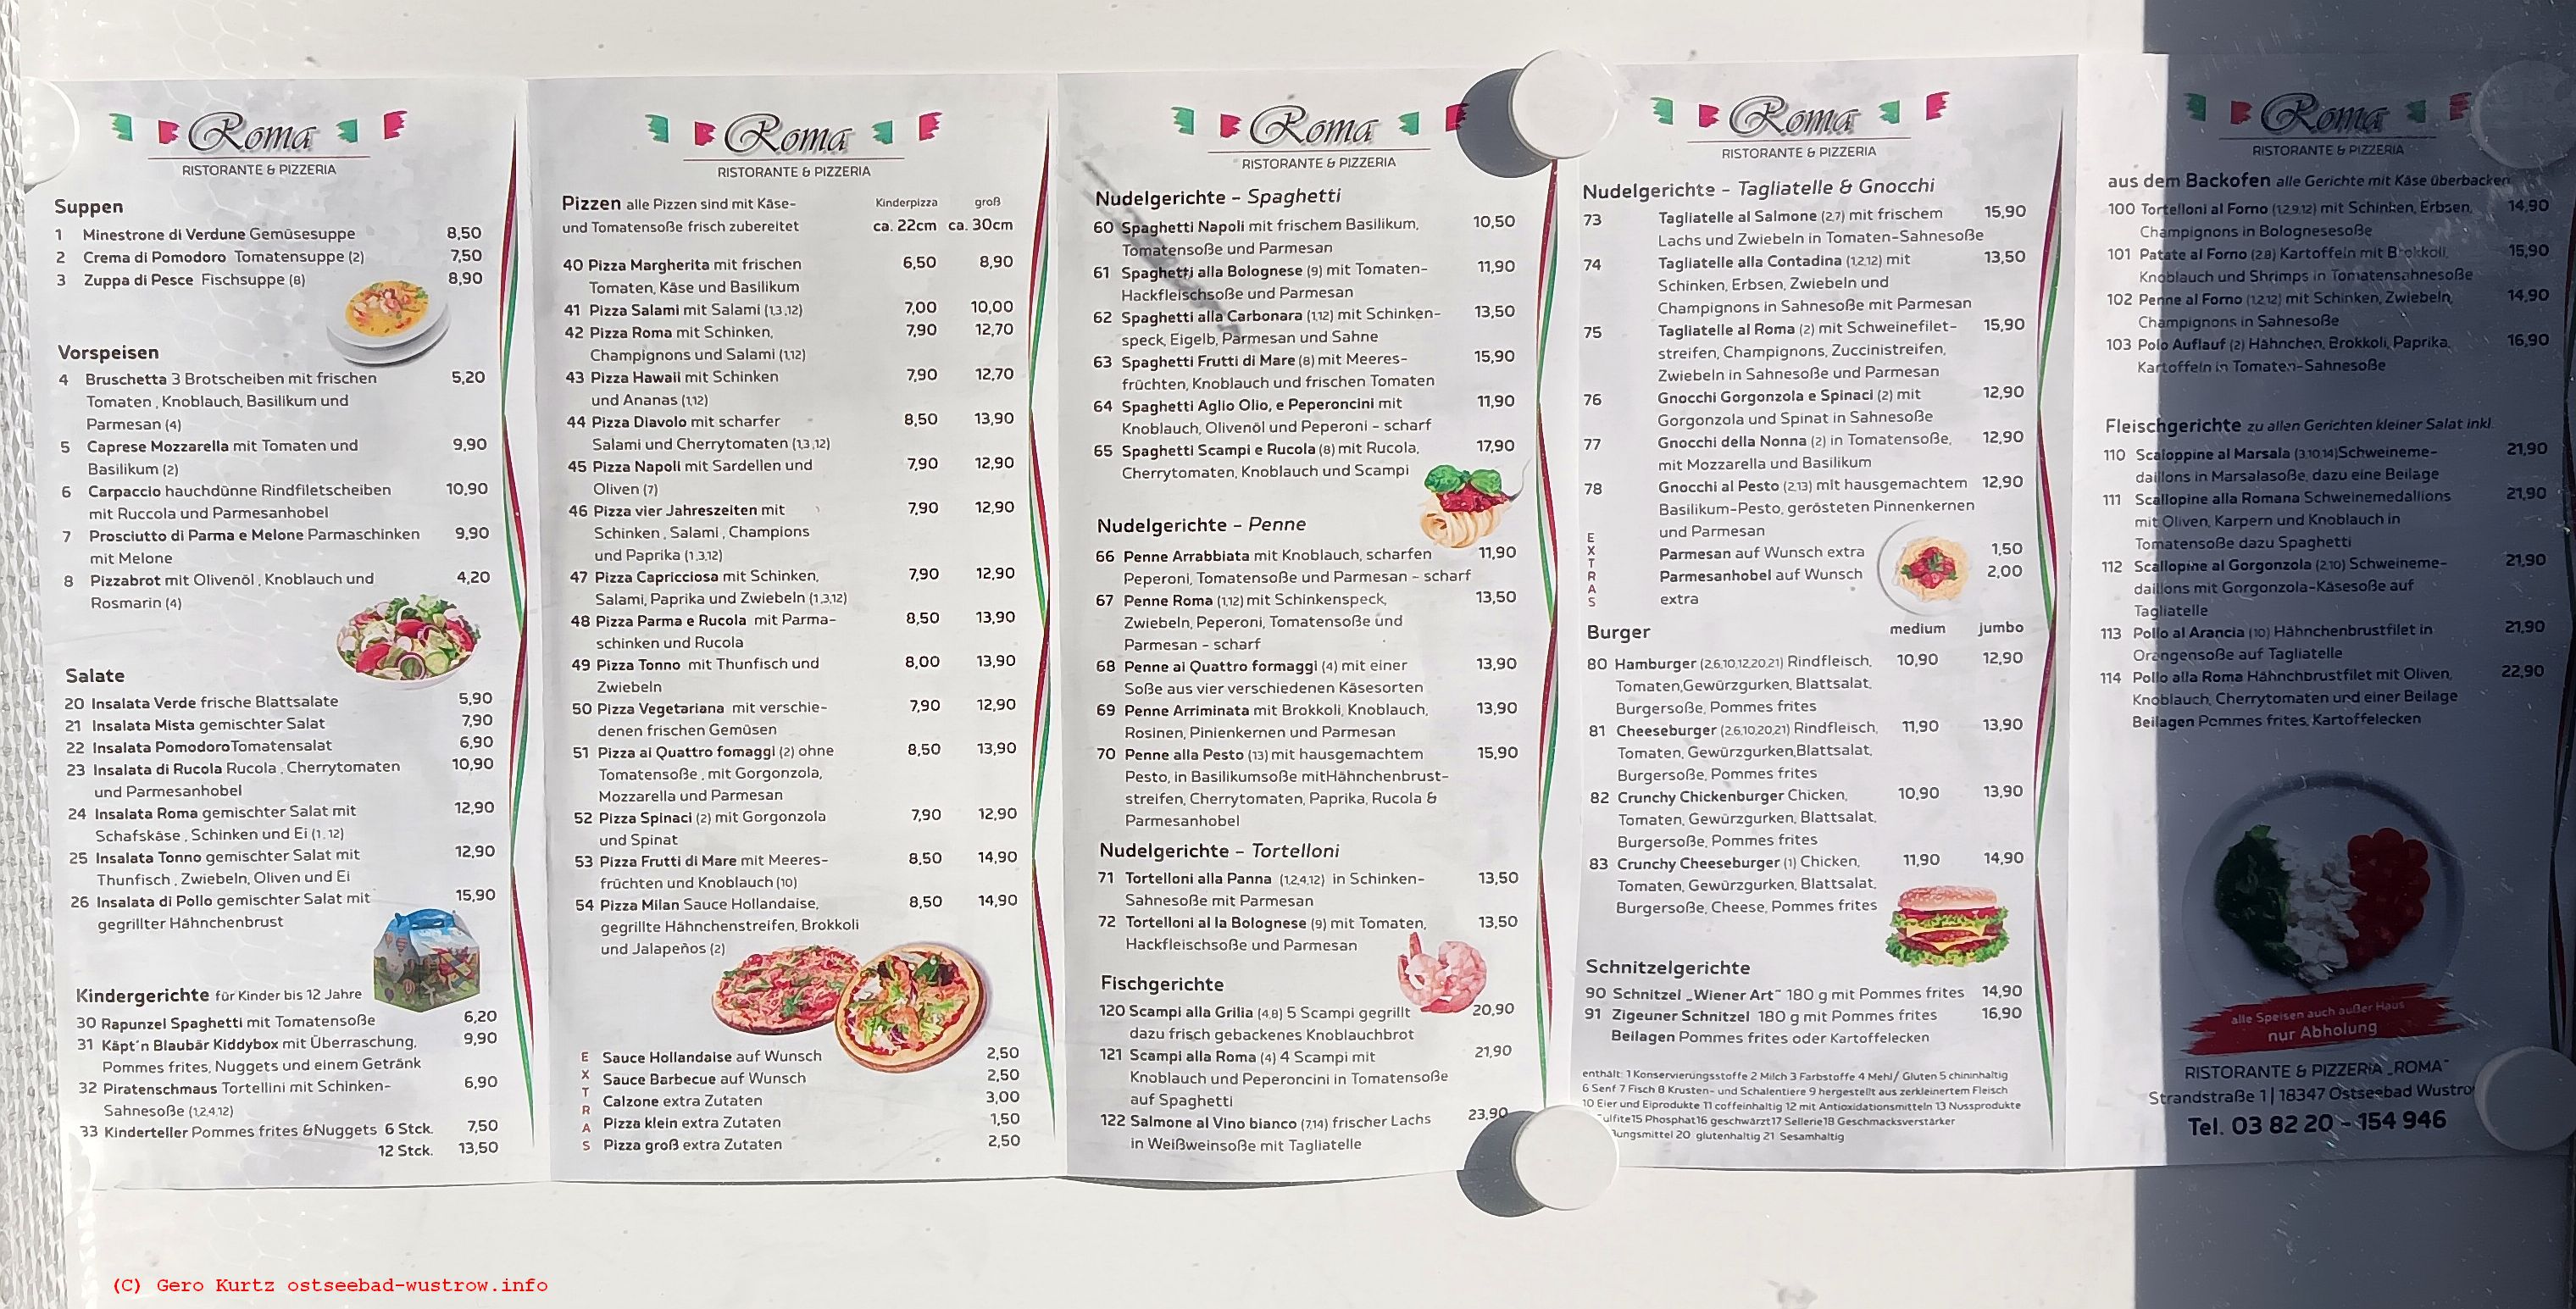 Ristorante & Pizzeria Roma Speisenkarte